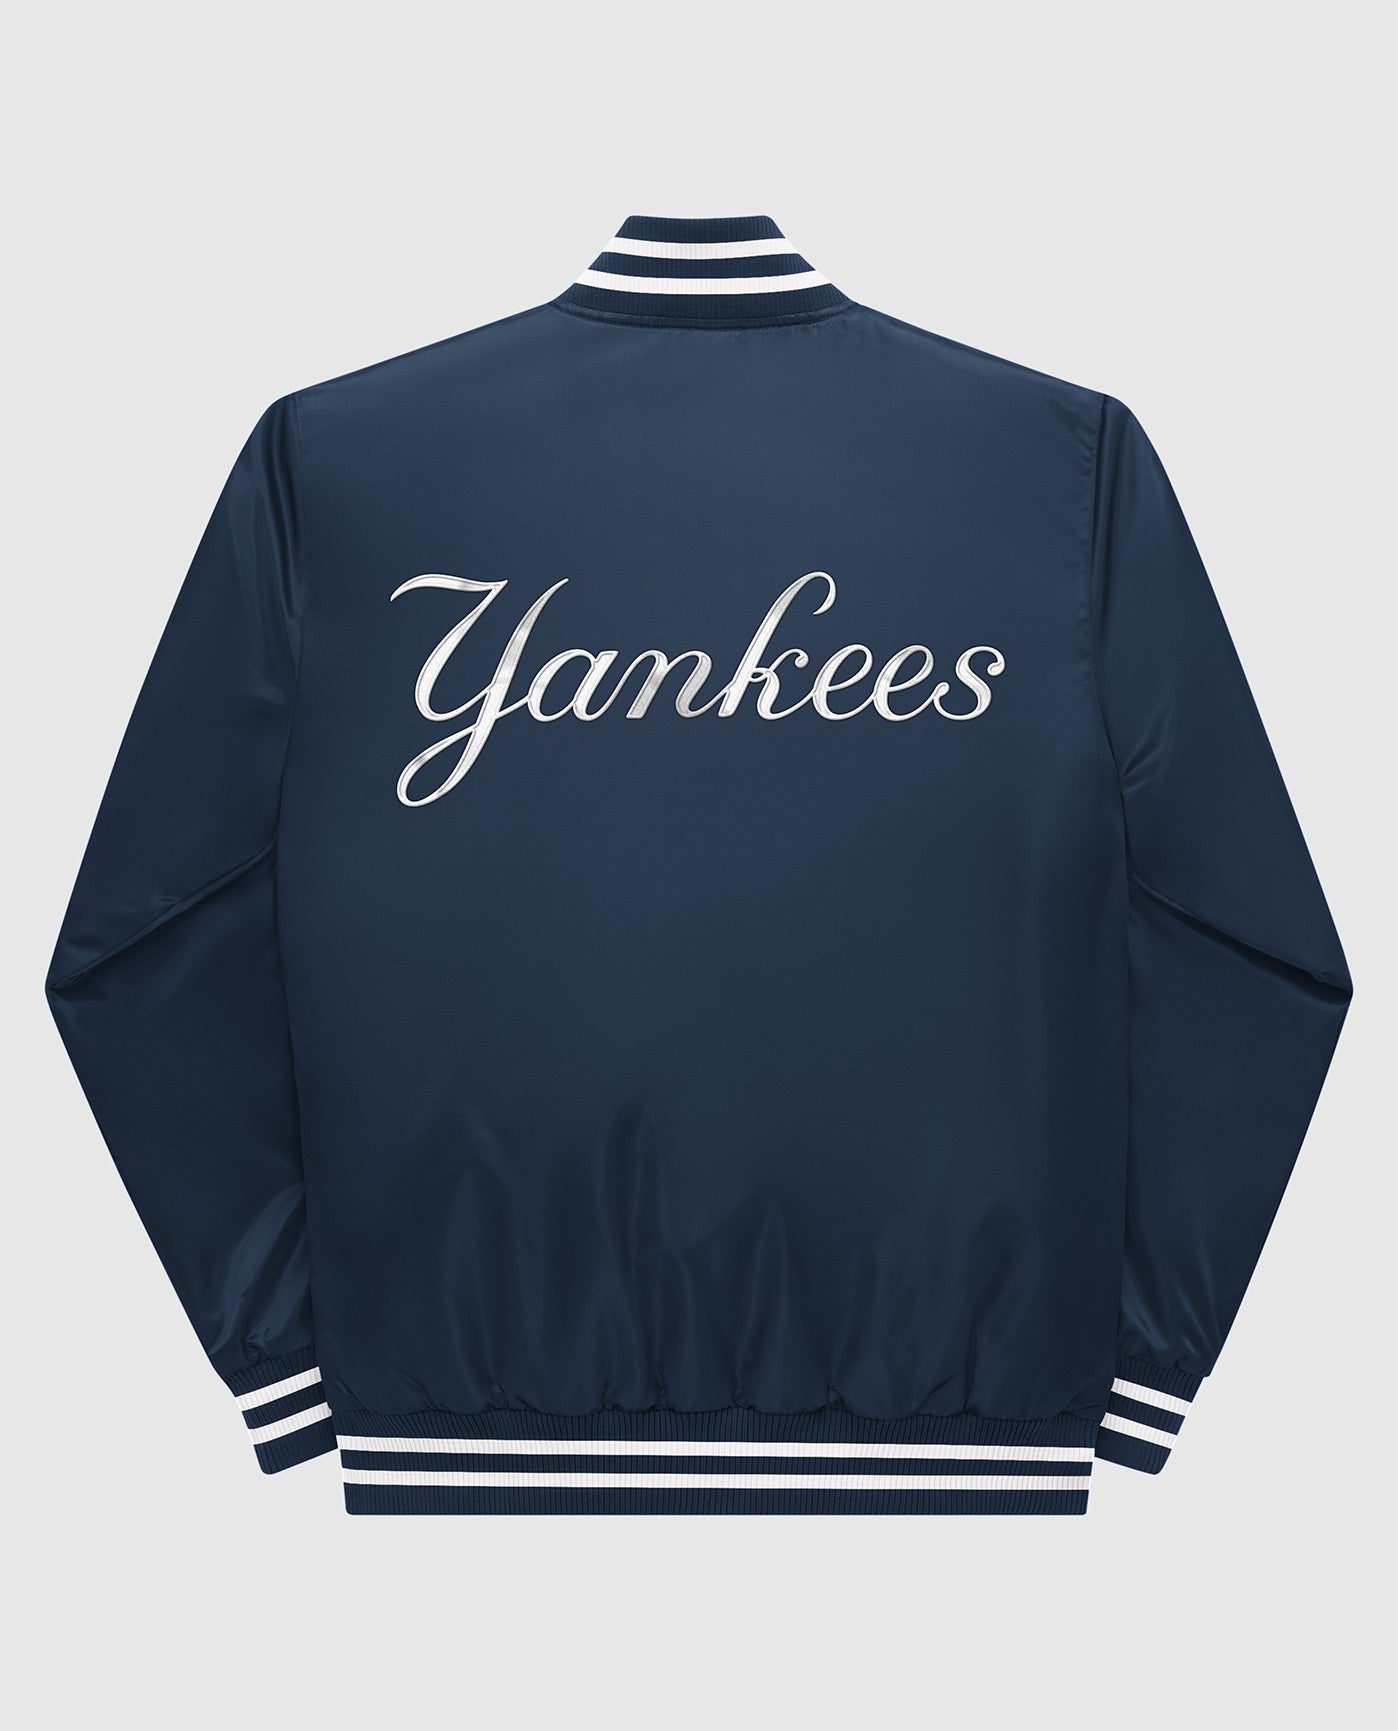 Maker of Jacket Men Jackets Navy/Gray New York Yankees Varsity Satin